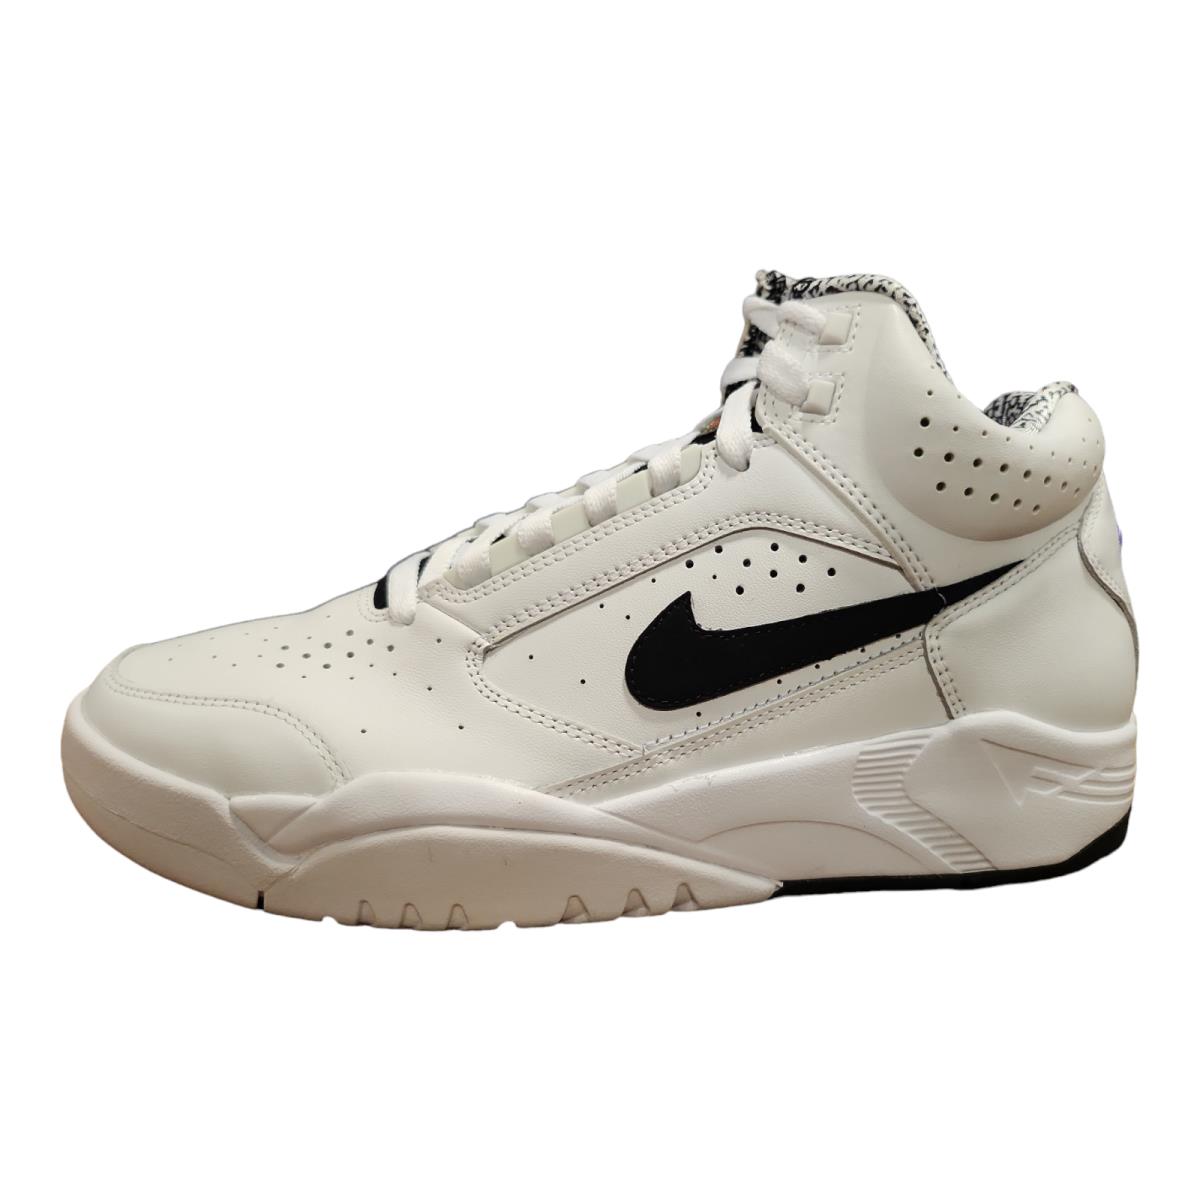 Nike Air Flight Lite Mid White Black Mens Basketball Shoes DJ2518-100 - White, Manufacturer: White/ Black